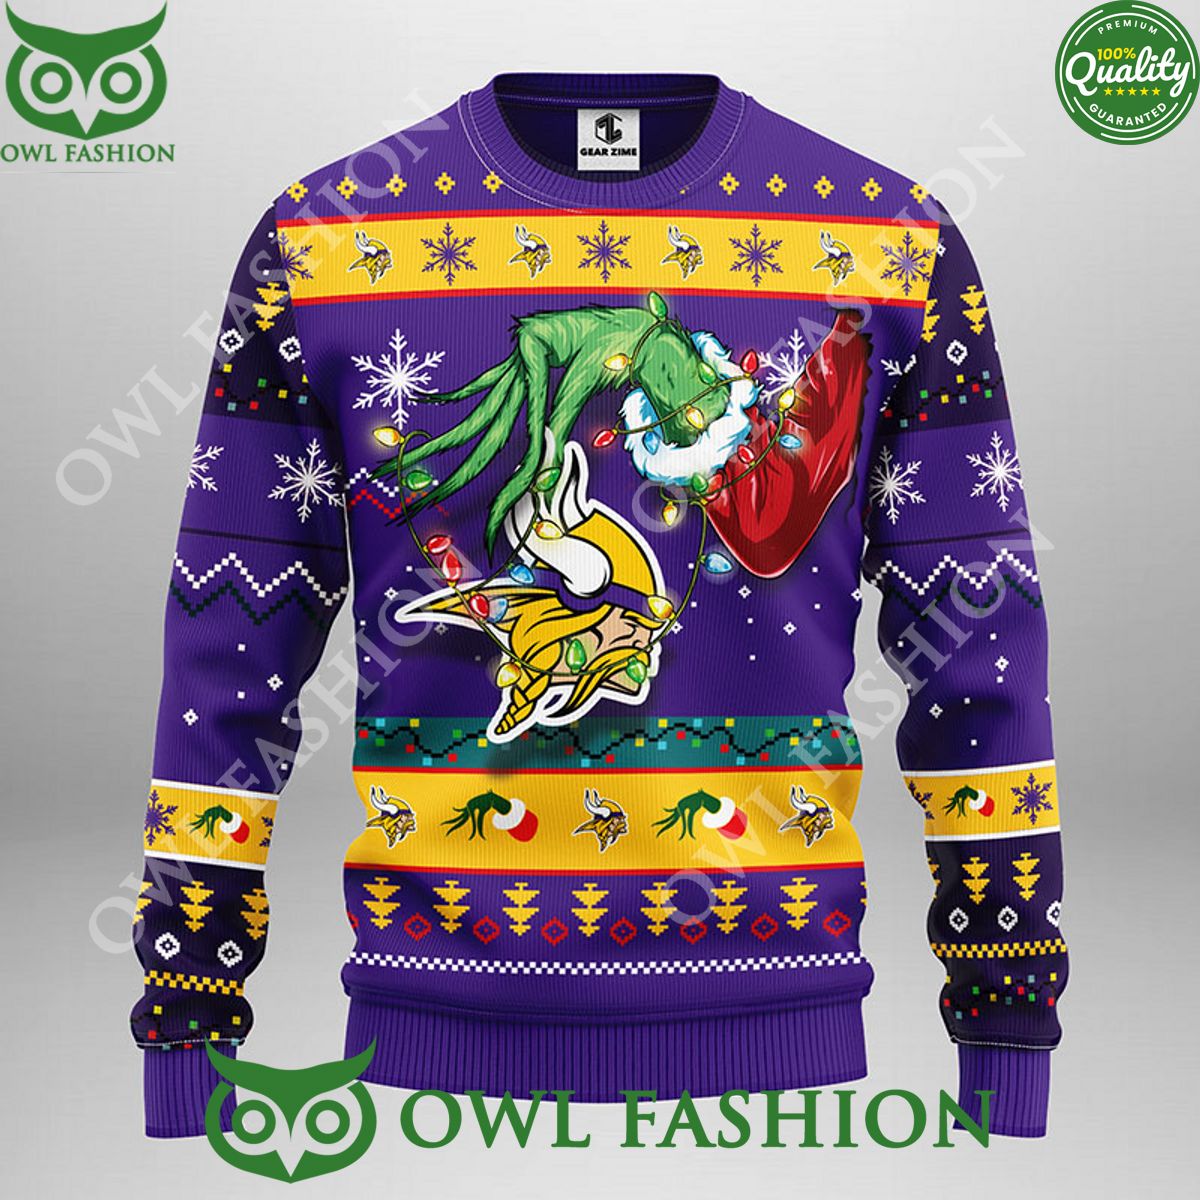 Grinch Stole Christmas Minnesota Vikings NFL Christmas Ugly Sweater Jumper